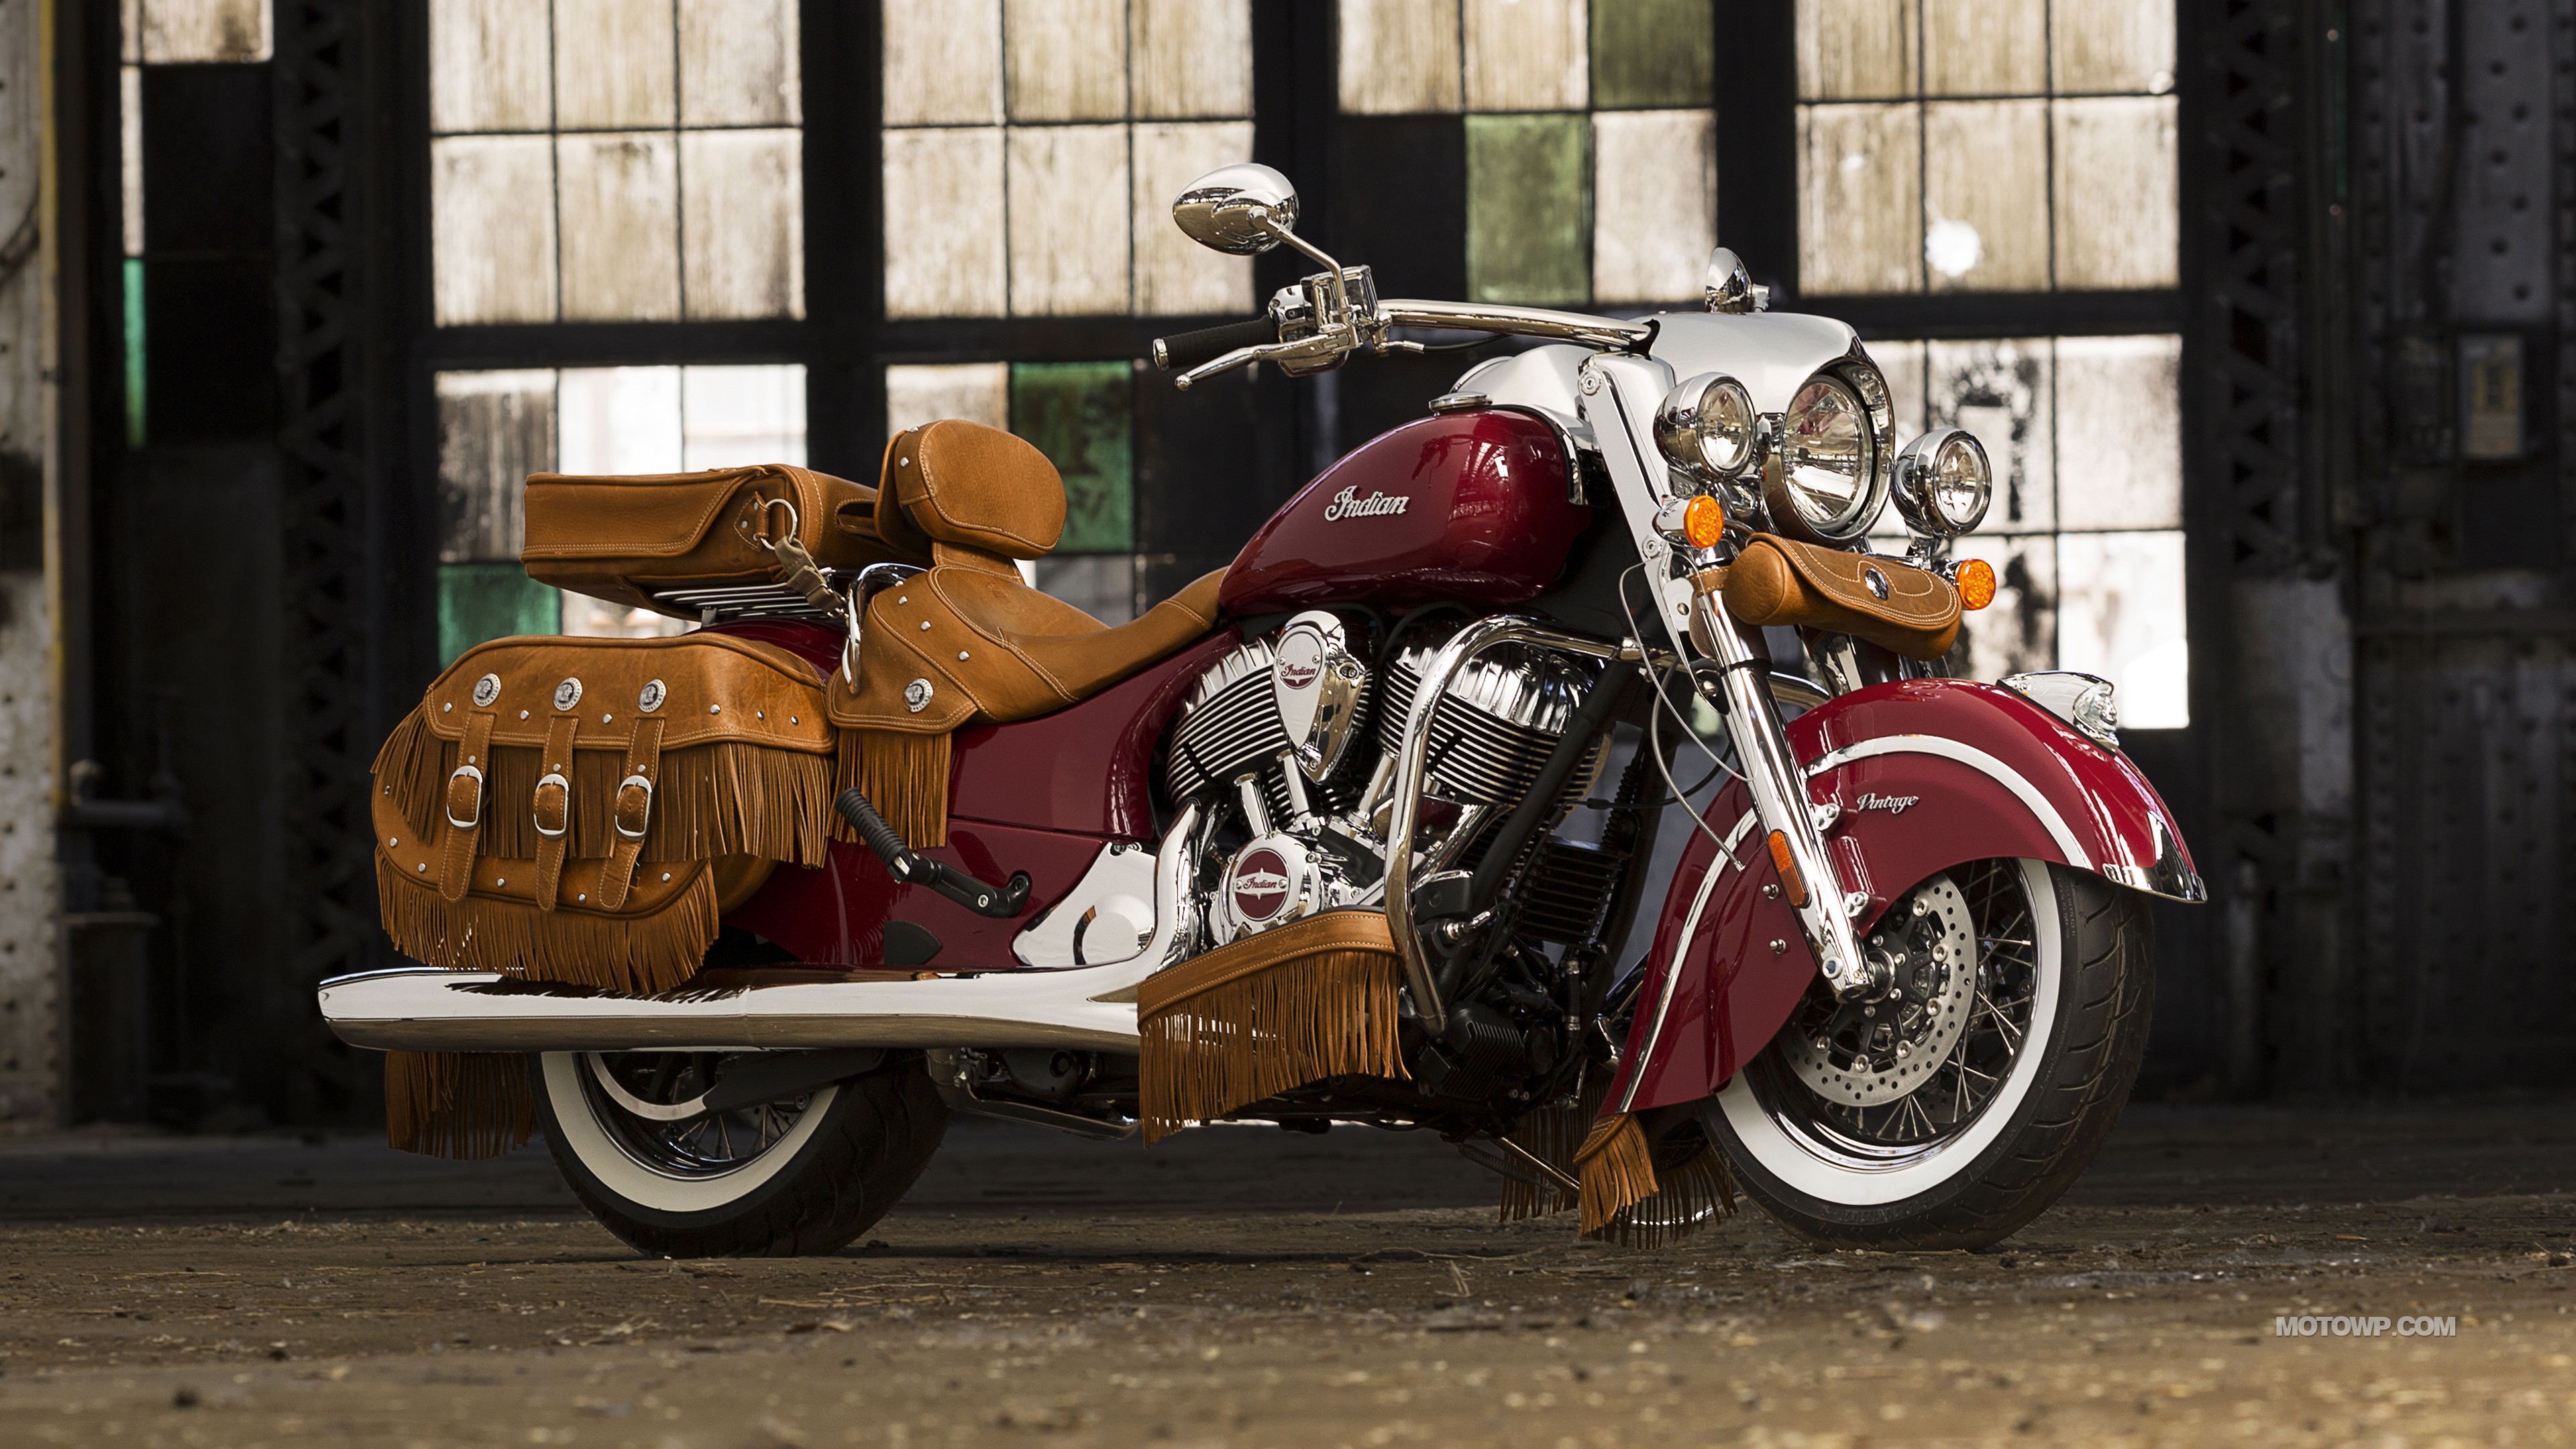 3840x2160 Motorcycles Desktop Wallpapers Indian Chief Vintage - 2014